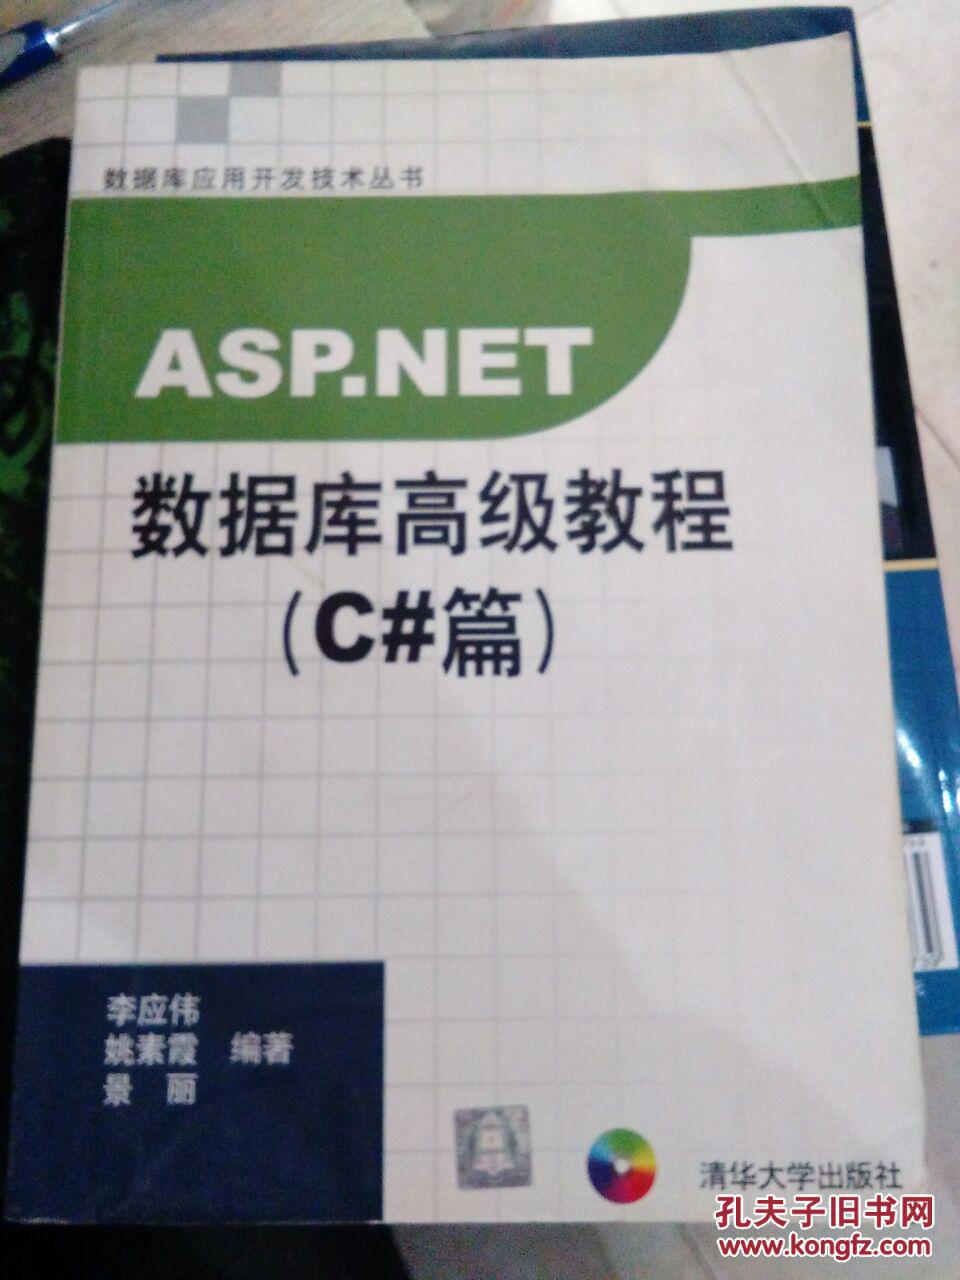 ASP.NET数据库高级教程